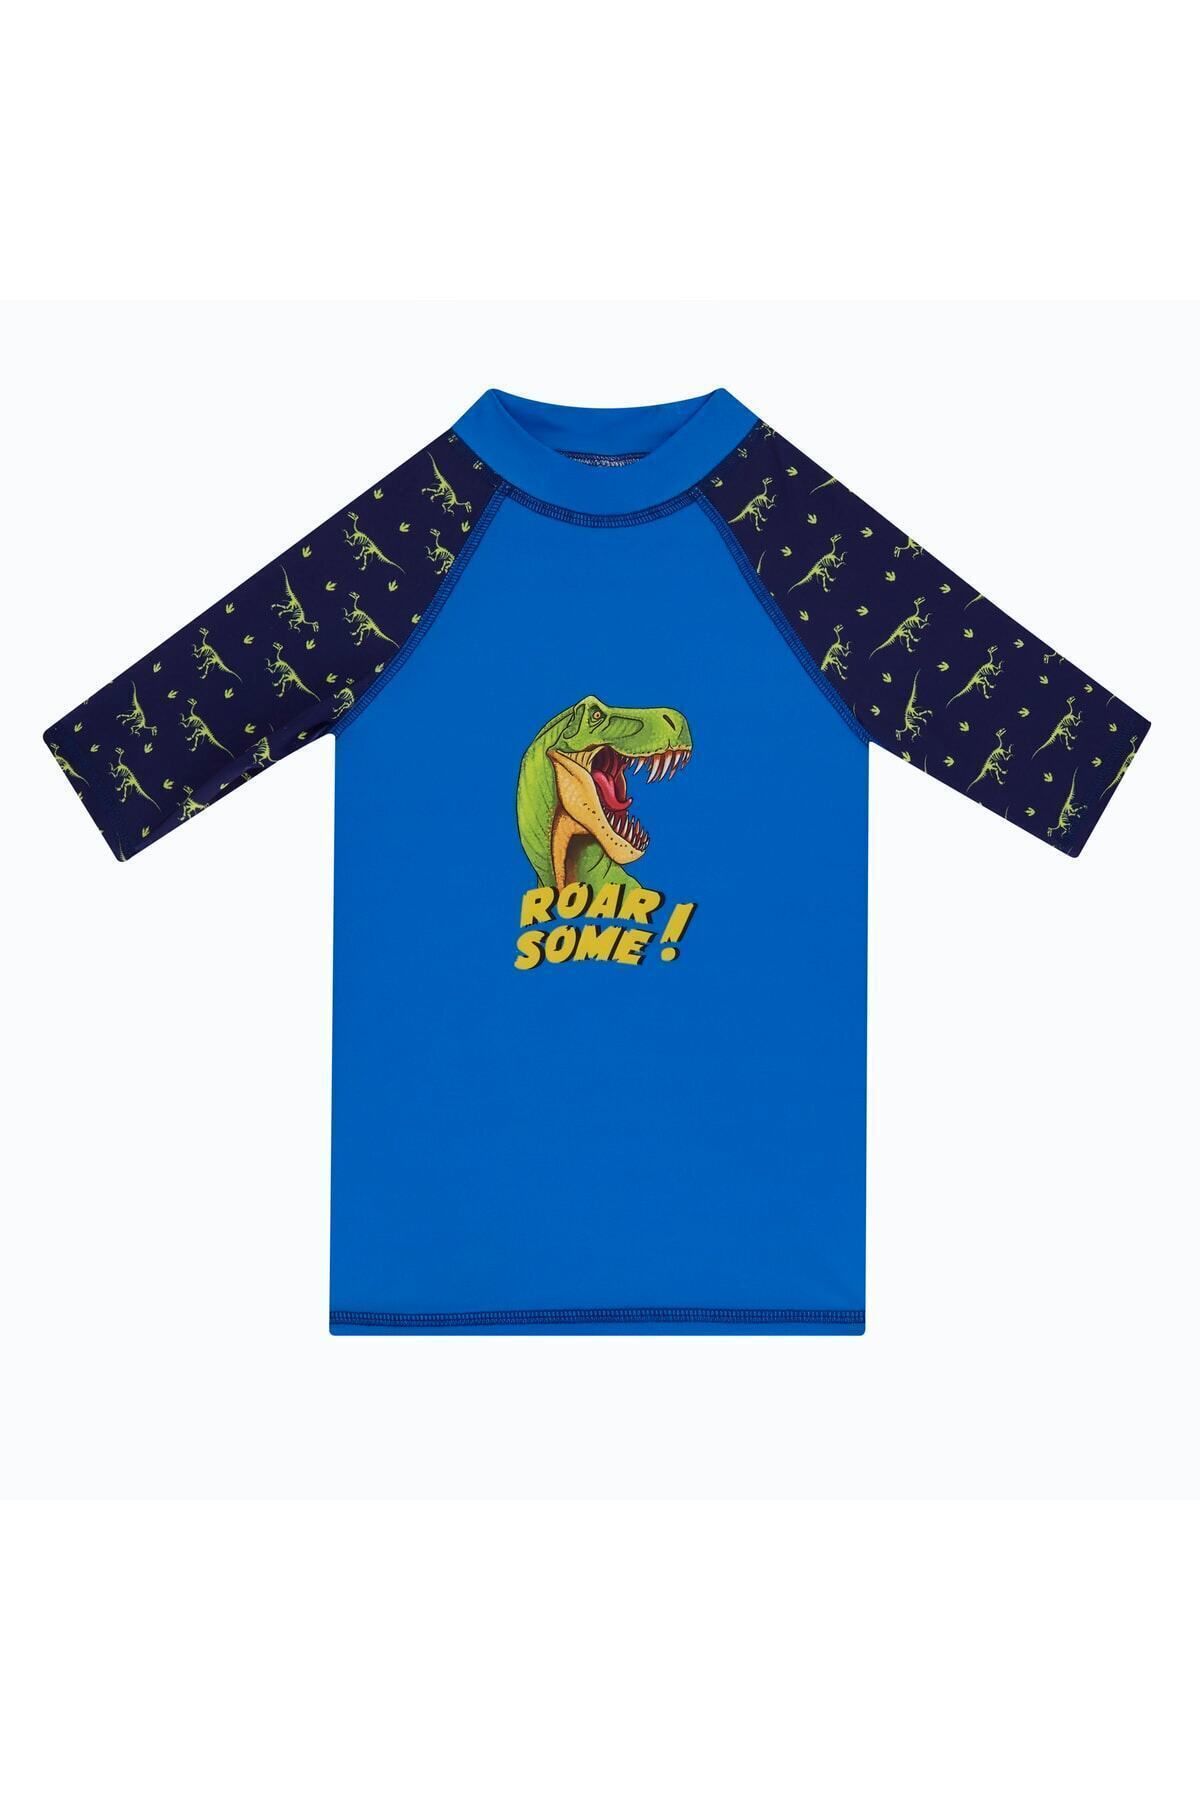 SLIPSTOP Matrix Kolay Kuruyan Uv Korumalı T Shirt Erkek Çocuk T SHİRT